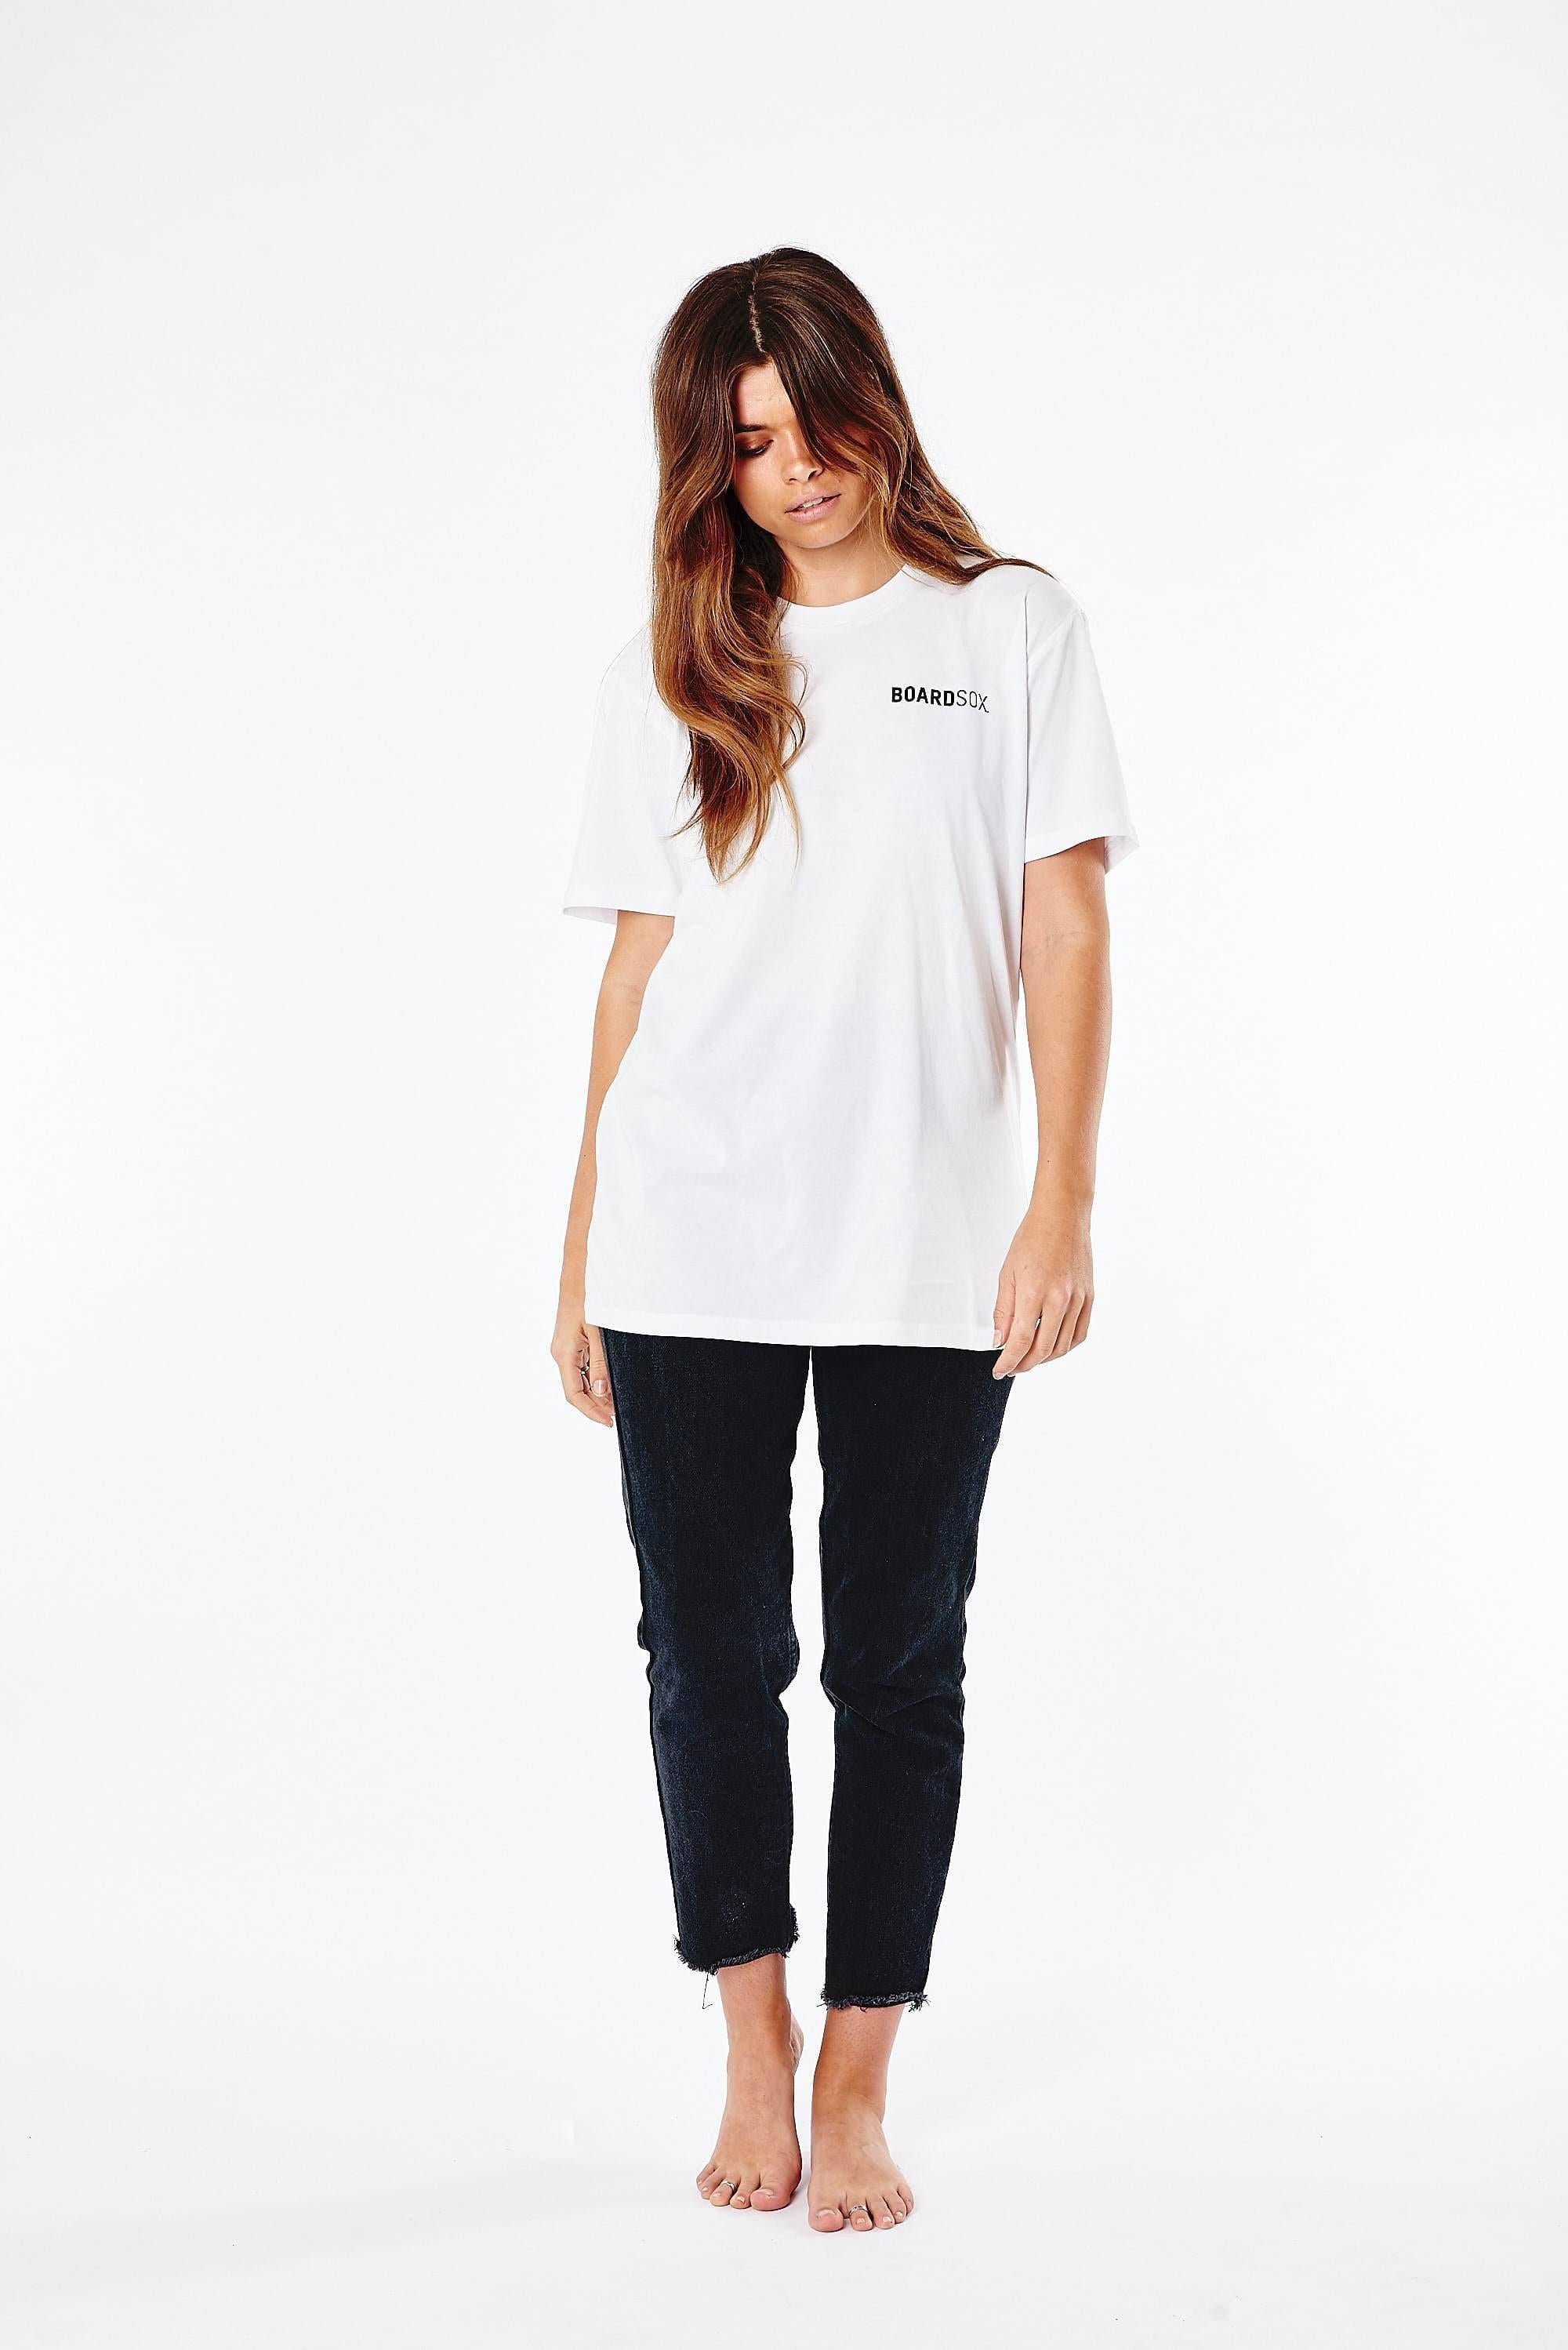 Boardsox® Womens White T-Shirt - BOARDSOX® AustraliaT-Shirt